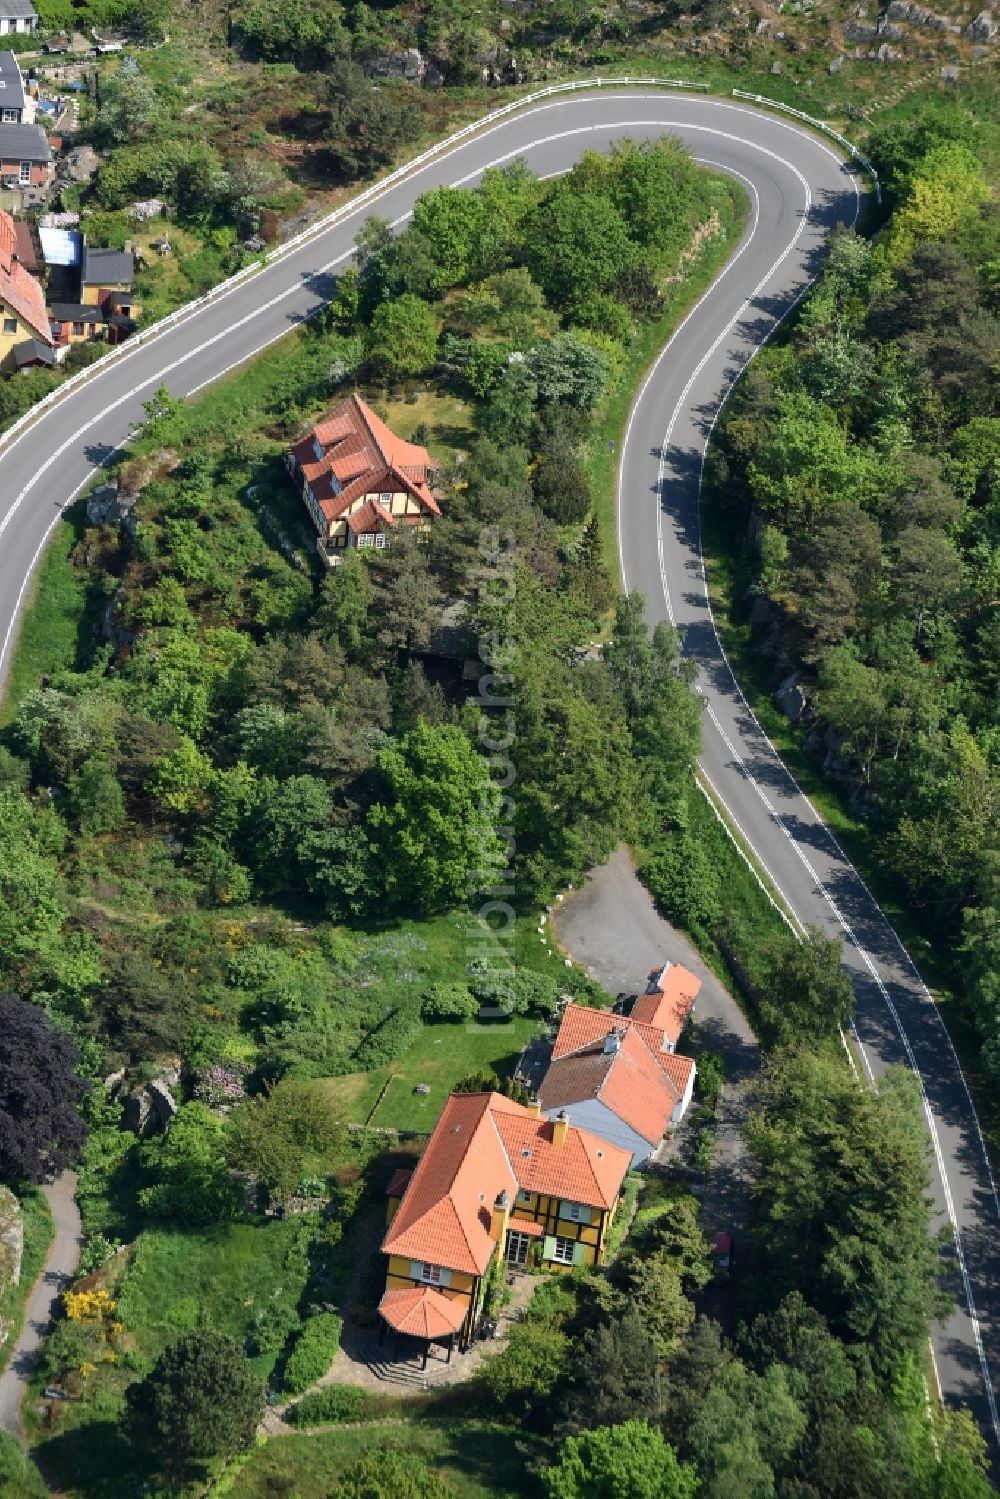 Luftaufnahme Gudhjem - Serpentinenförmiger Kurvenverlauf der Straßenführung Norresand in Gudhjem in Region Hovedstaden, Dänemark